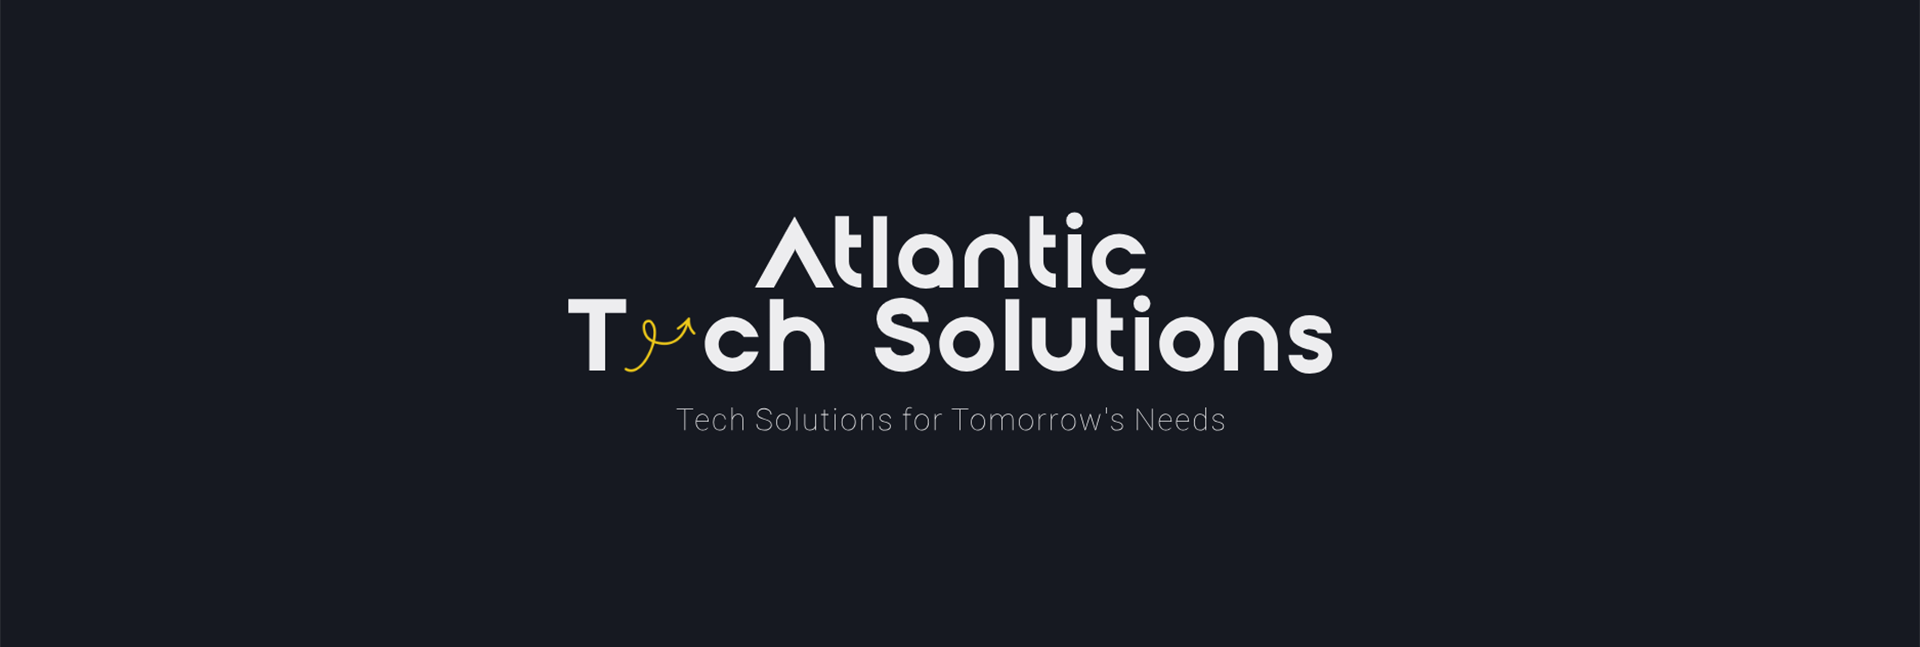 Atlantic Tech Solutions